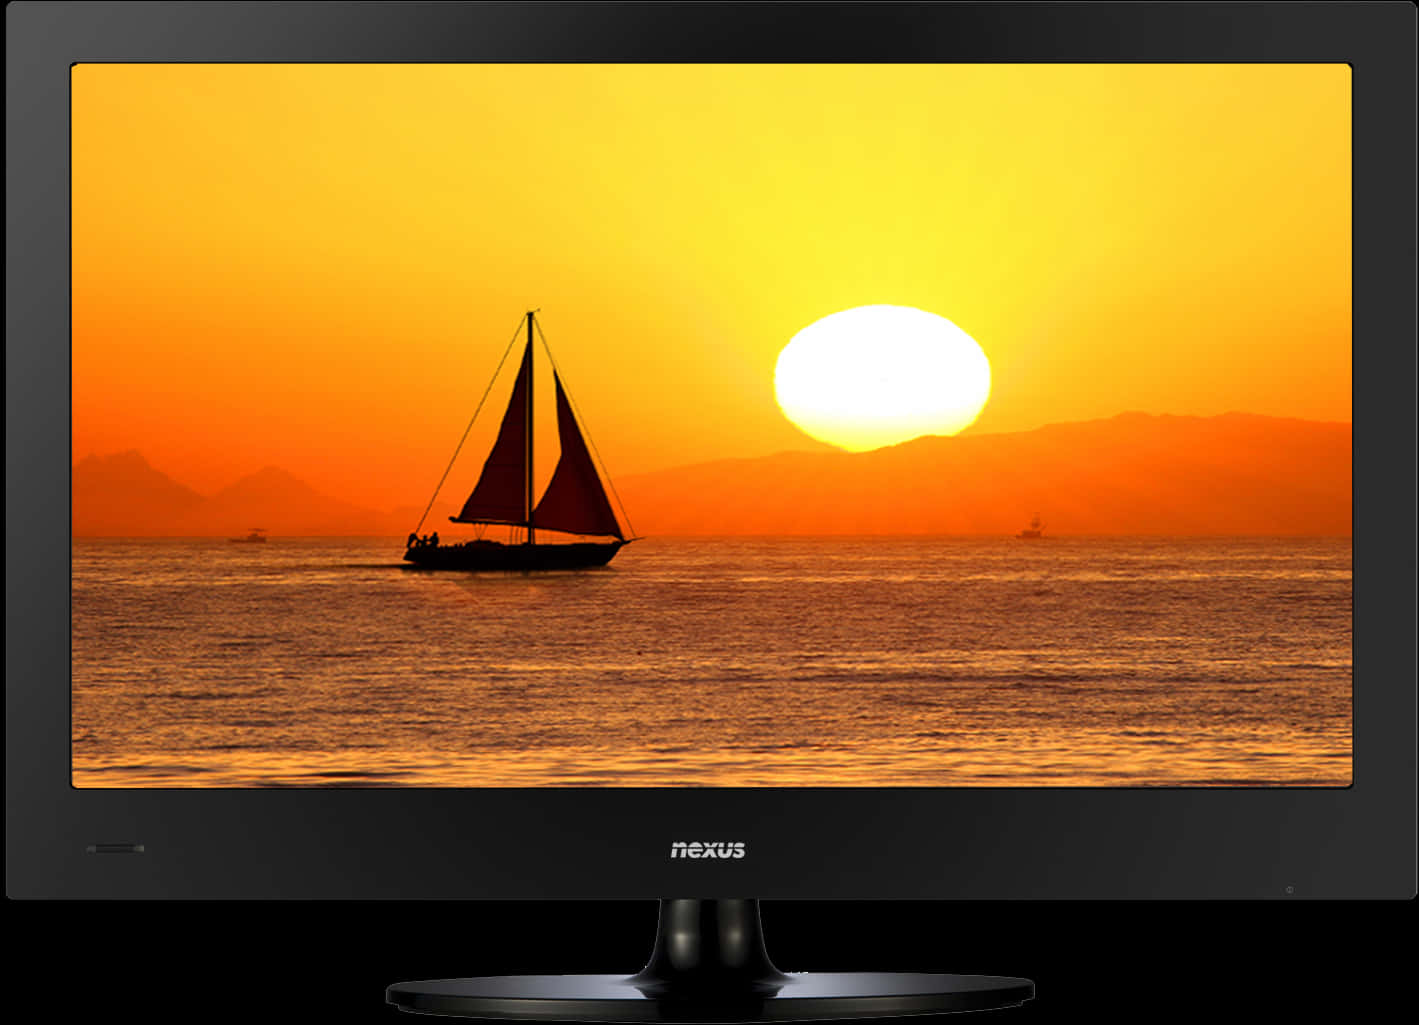 Sunset Sailingon T V Screen PNG